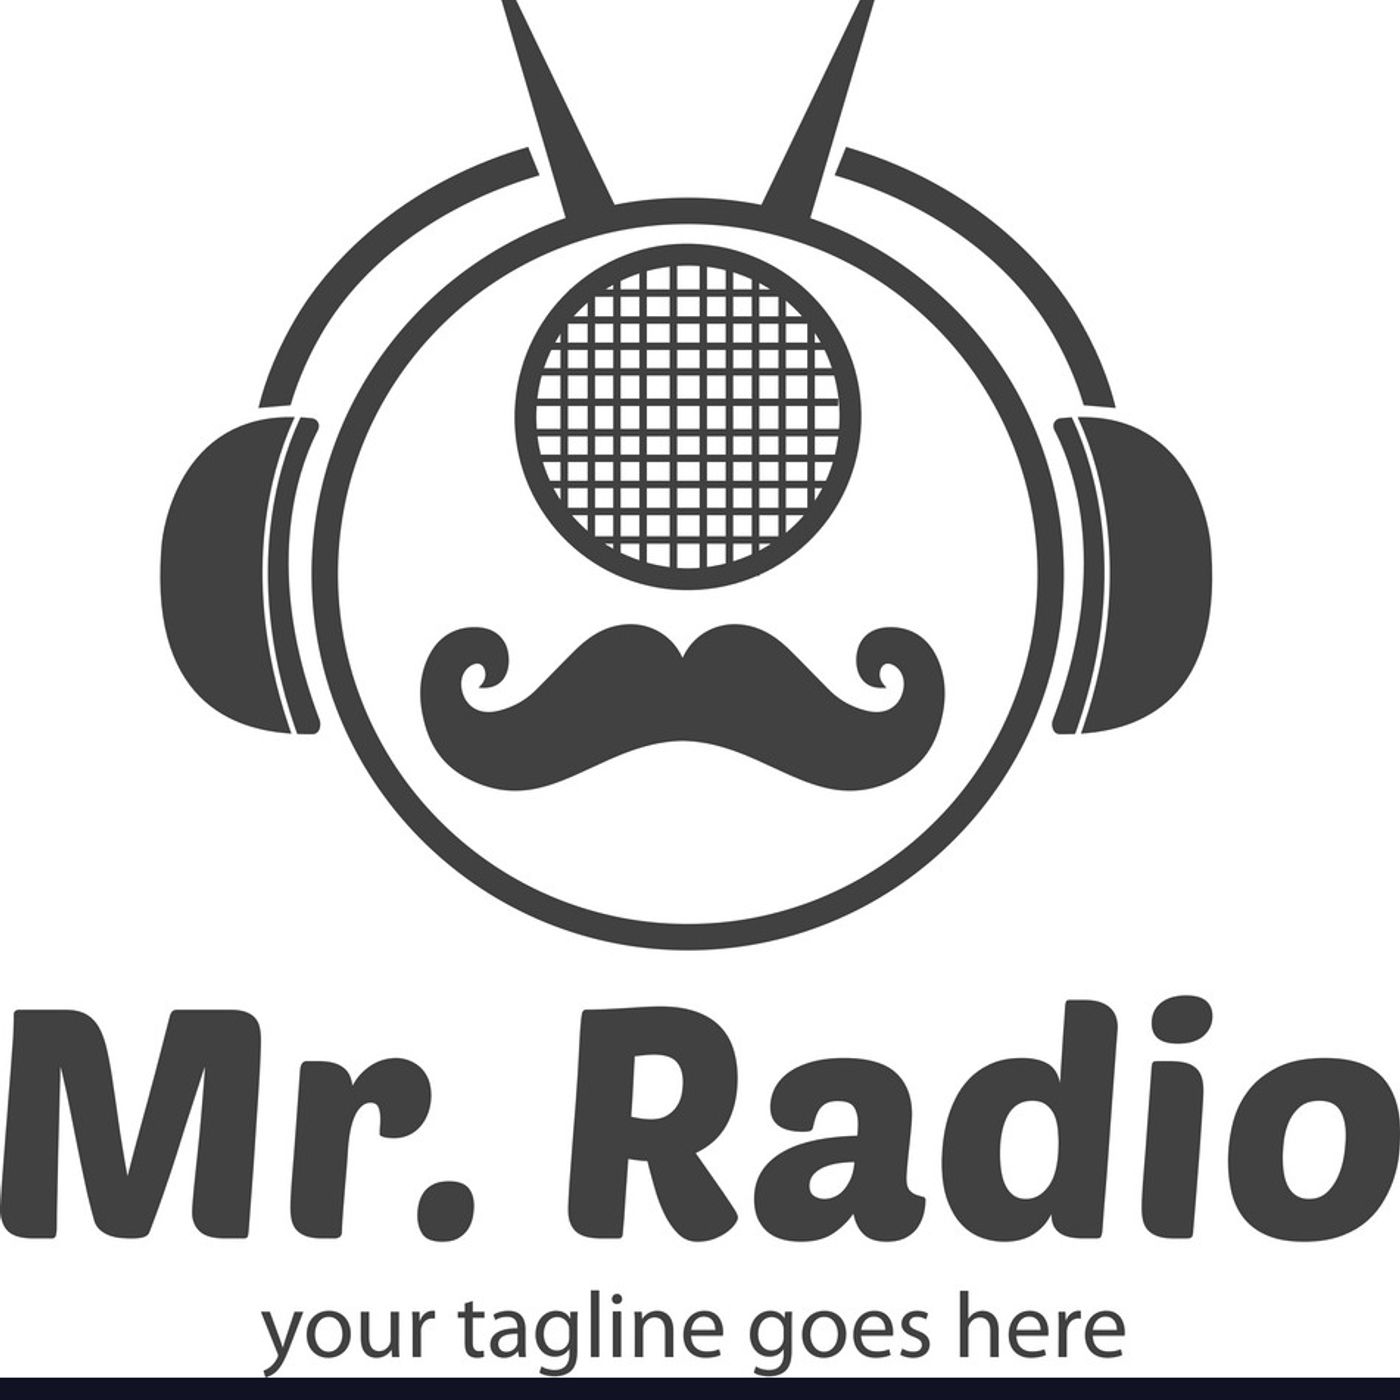 Rad ii. Логотипы радиостанций. Эмблема радио. ЭДИО. Радиол.